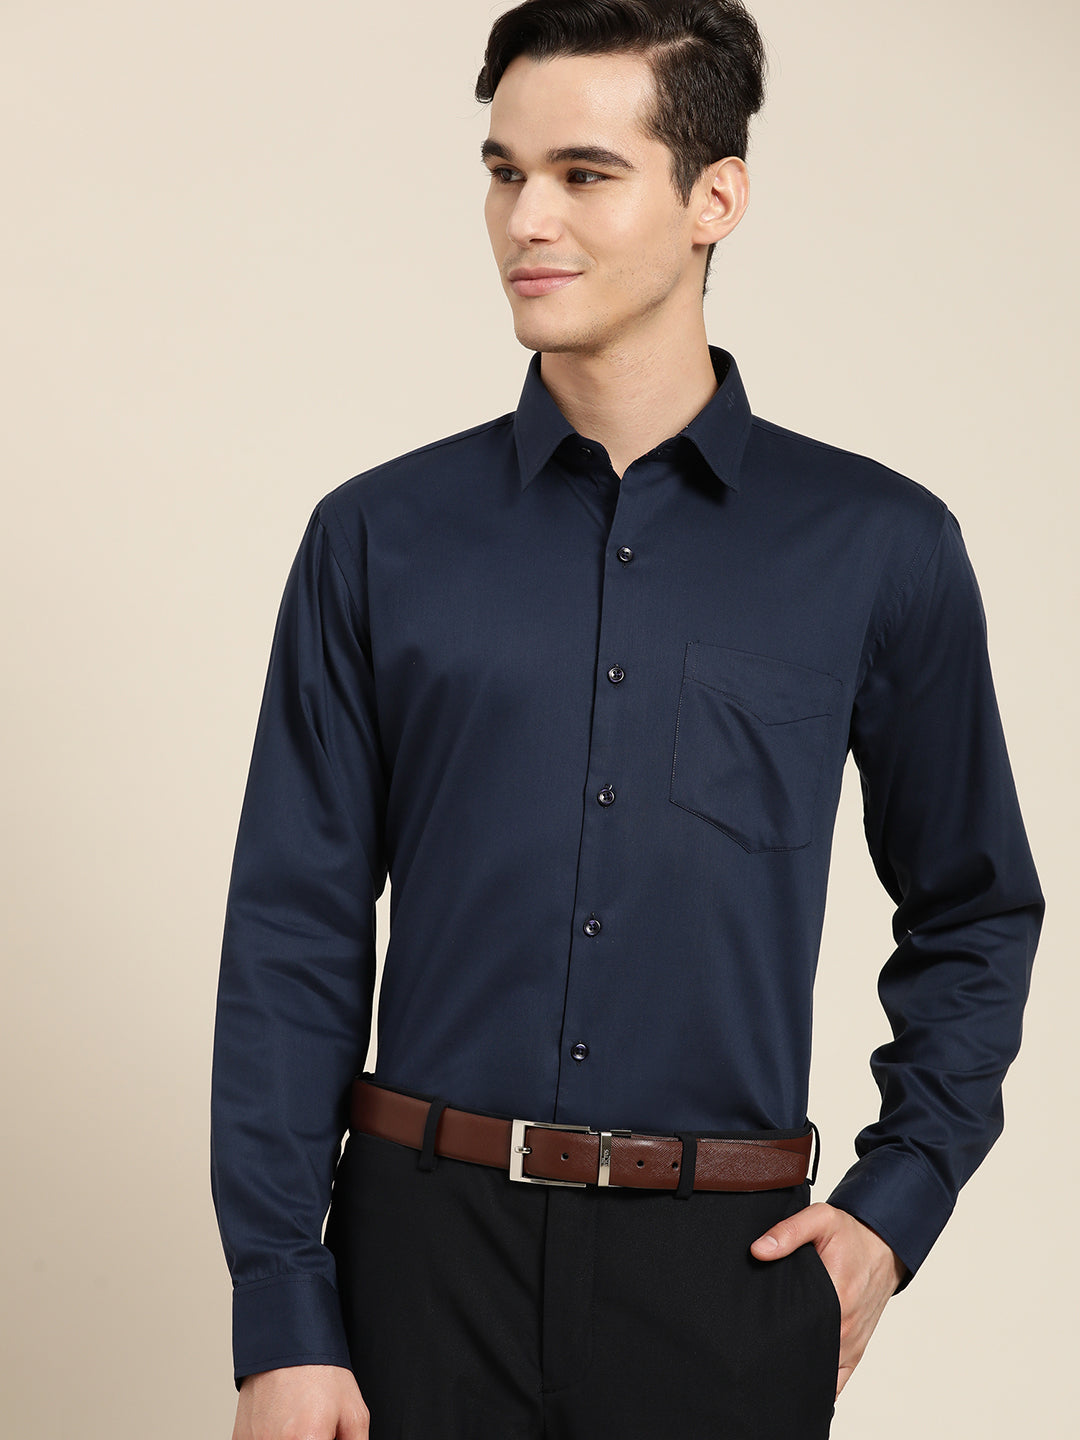 Ariat Wrinkle Free Navy Blue Long Sleeve Shirt